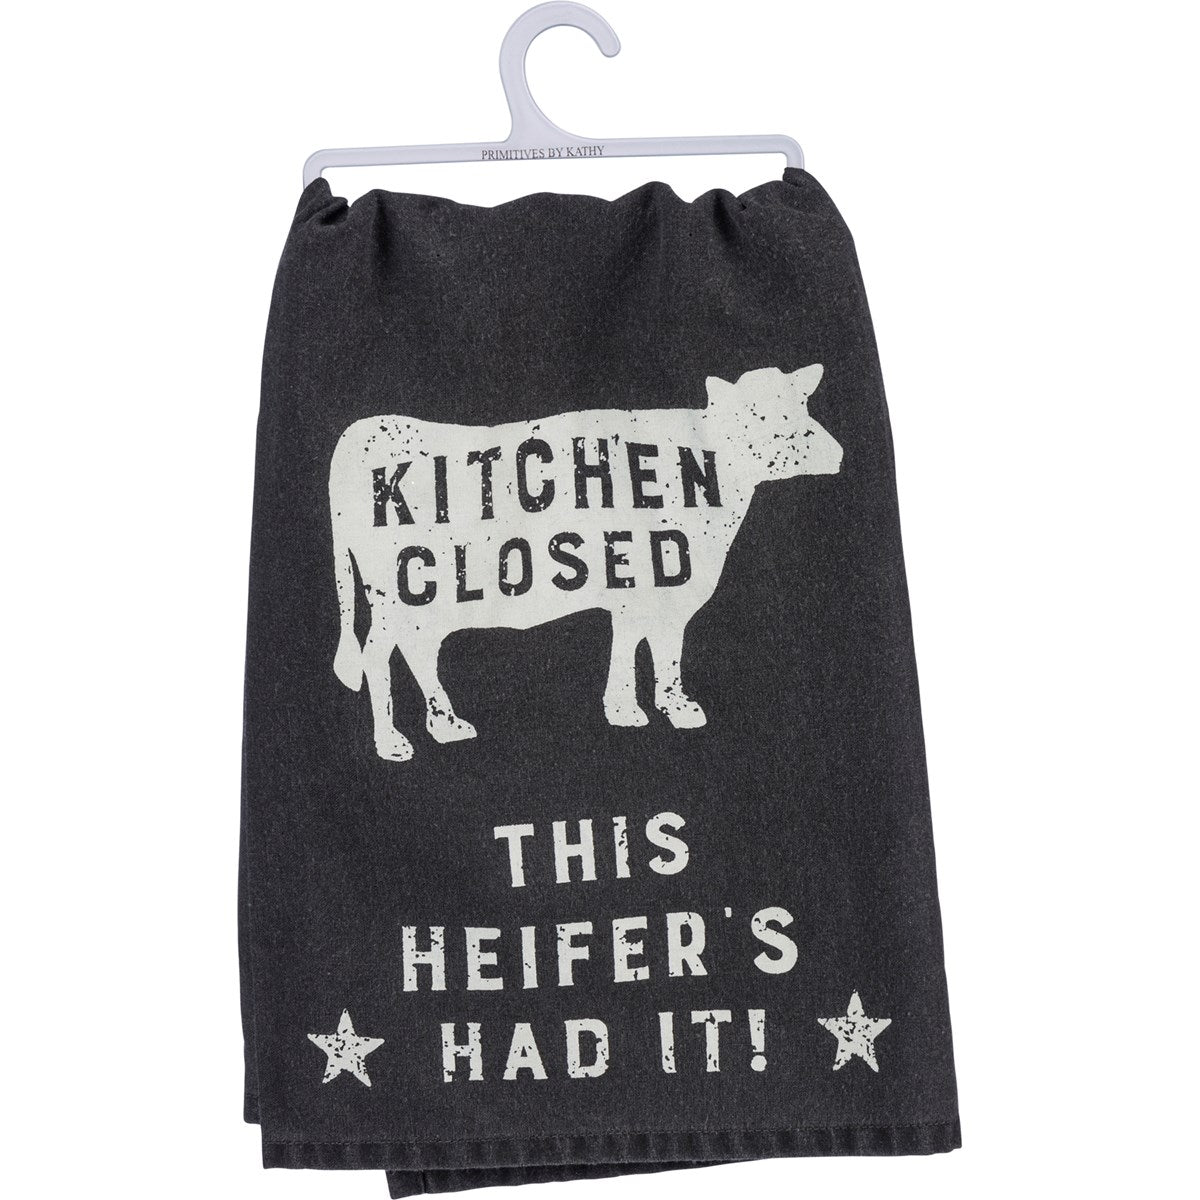 "KITCHEN CLOSED THIS HEIFER'S HAD IT!" DISH TOWEL